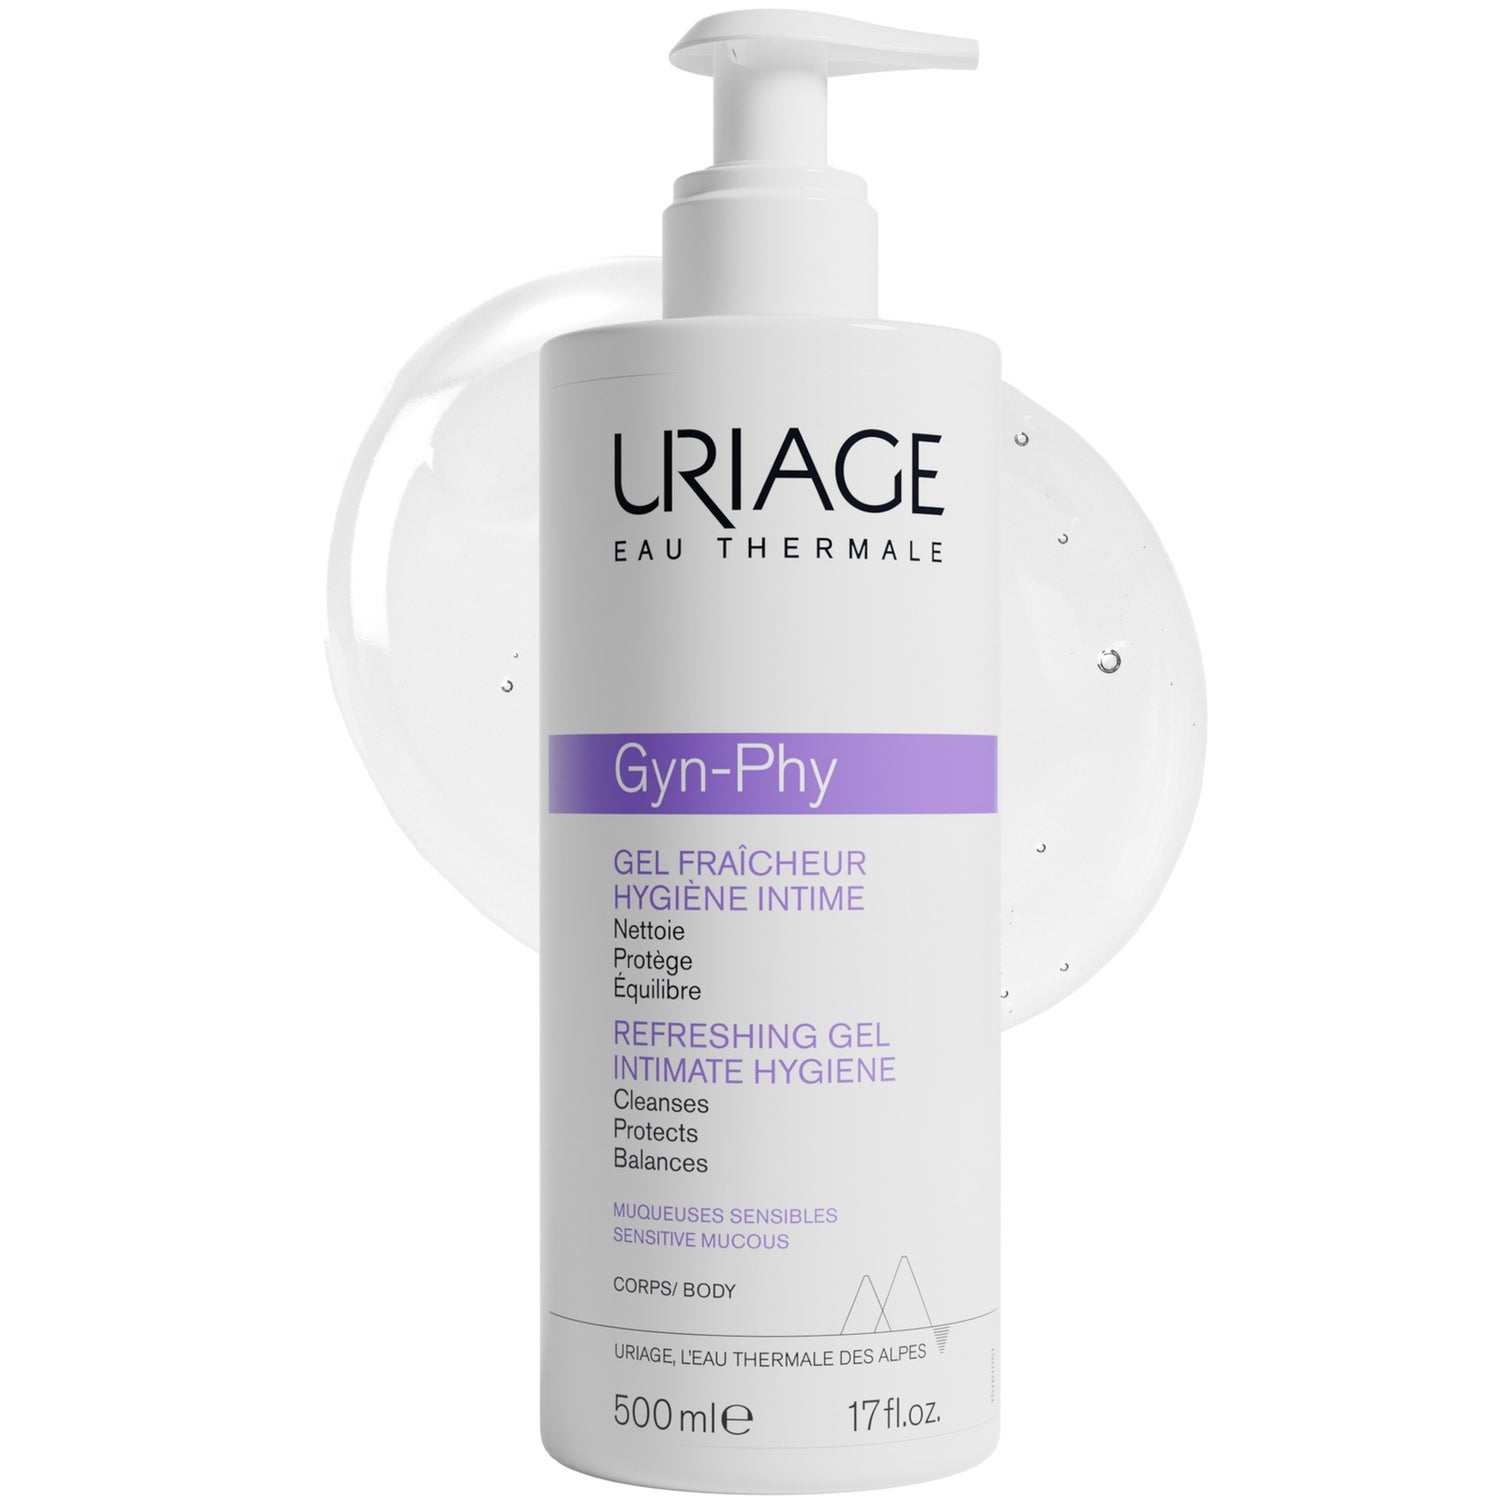 Uriage Gyn-Phy Intimate Hygiene Daily Cleansing Gel (400ml)